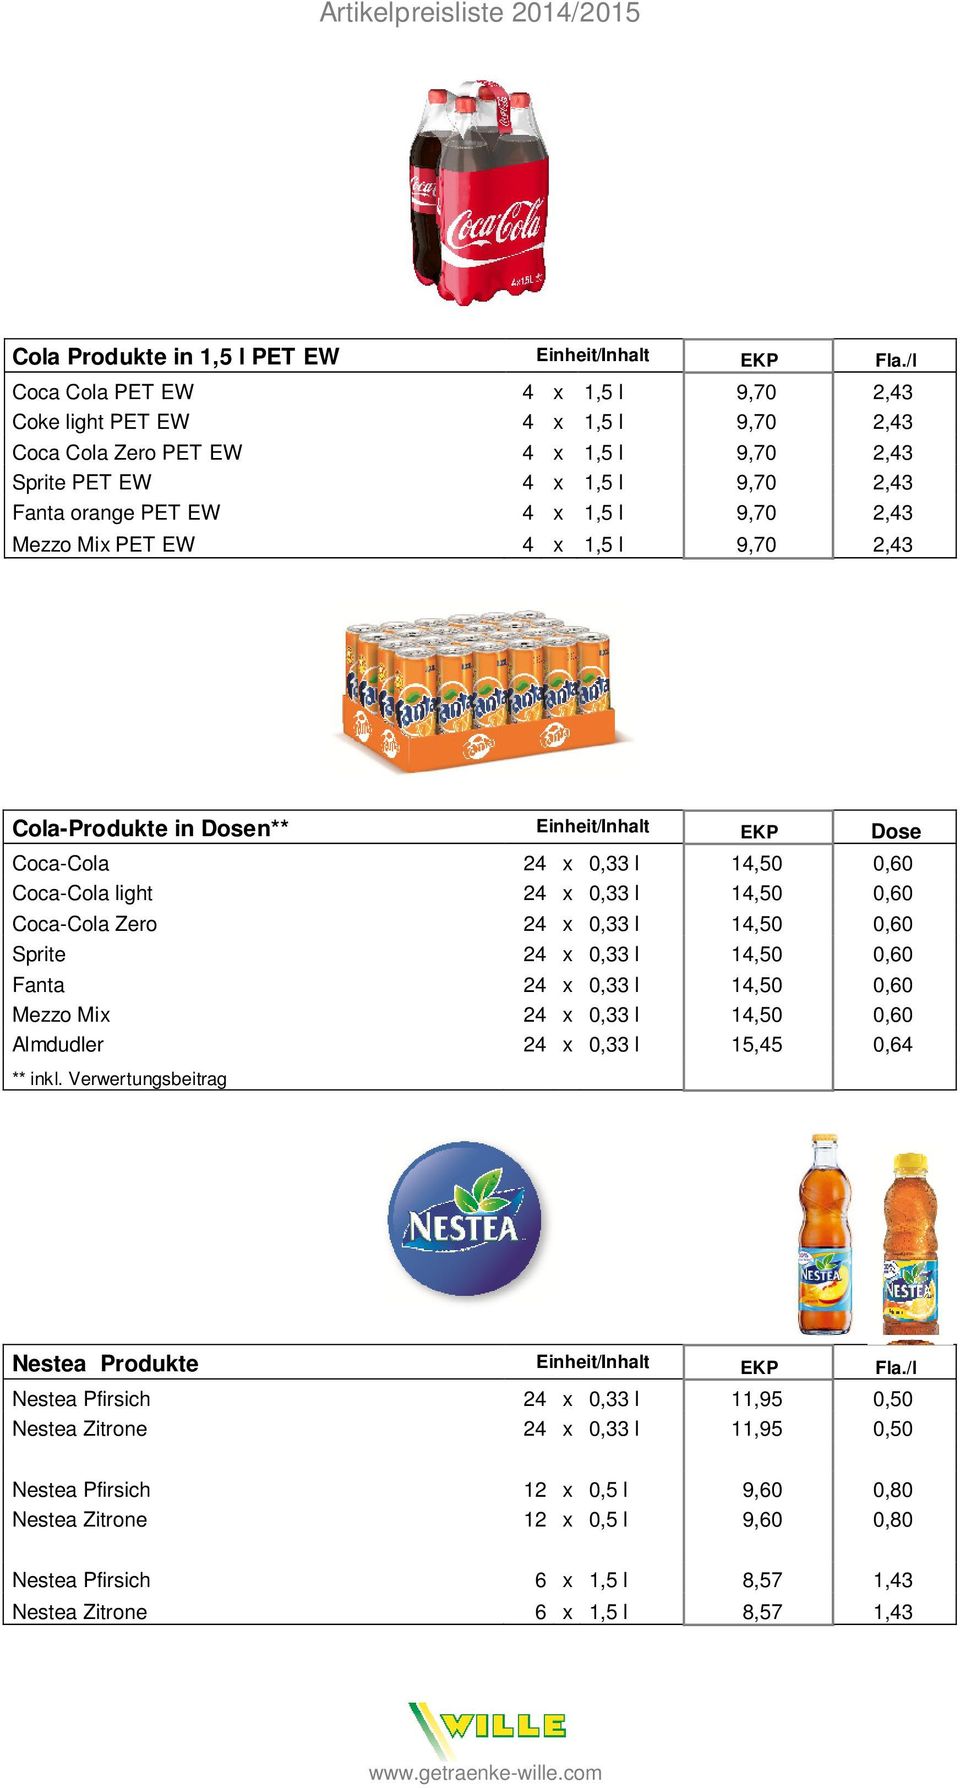 Mix PET EW 4 x 1,5 l 9,70 2,43 Cola-Produkte in Dosen** Einheit/Inhalt EKP Dose Coca-Cola 24 x 0,33 l 14,50 0,60 Coca-Cola light 24 x 0,33 l 14,50 0,60 Coca-Cola Zero 24 x 0,33 l 14,50 0,60 Sprite 24